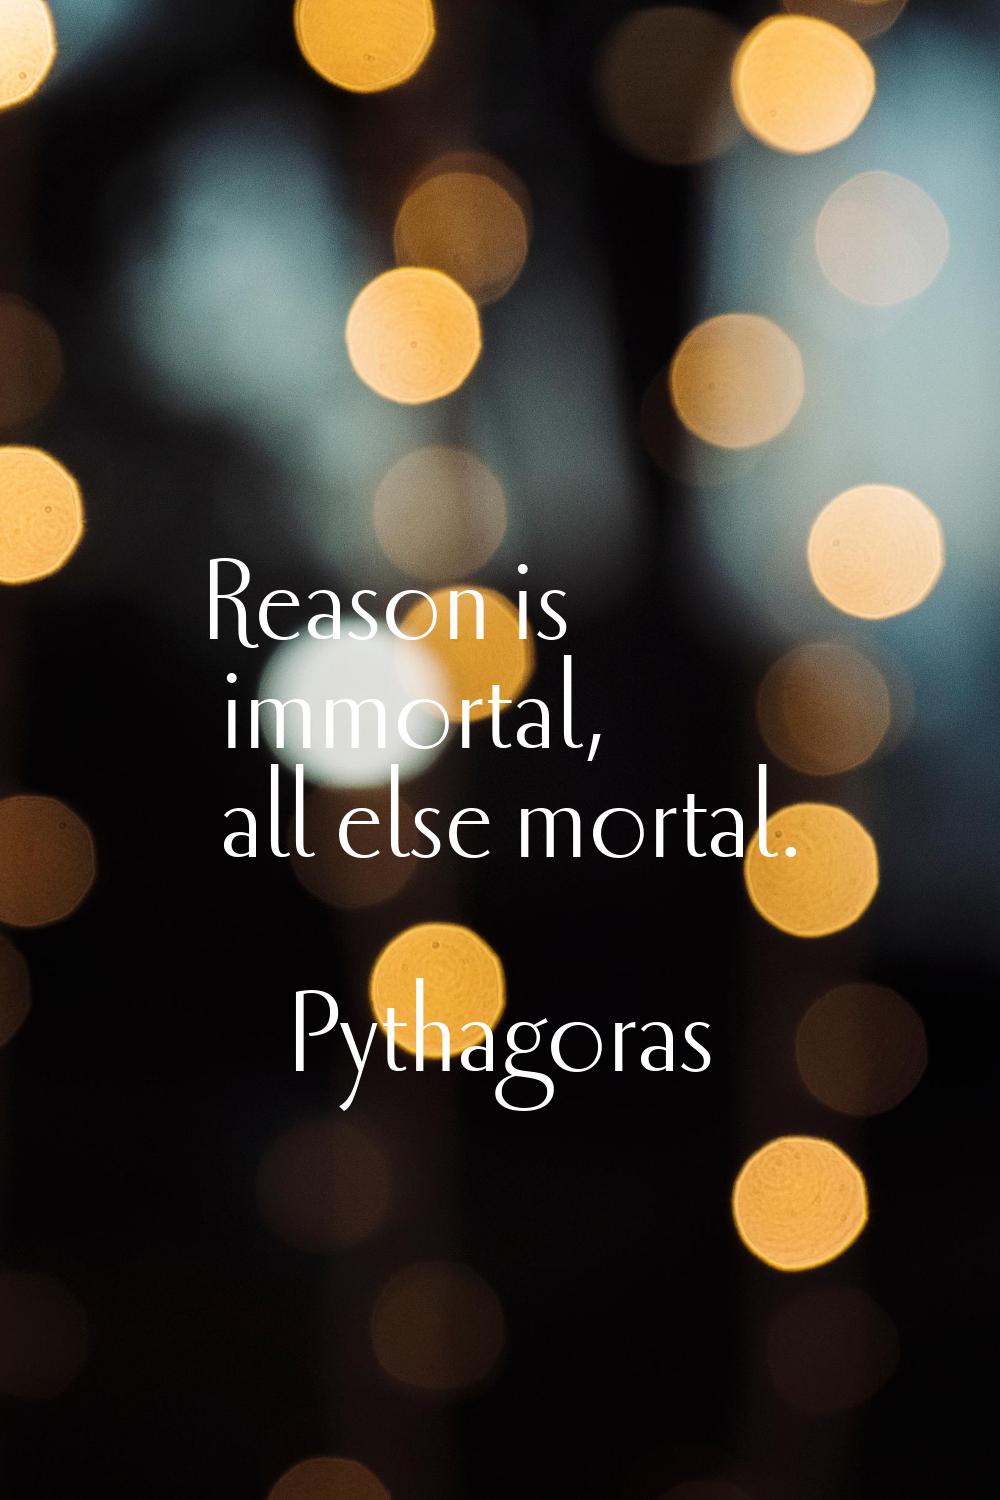 Reason is immortal, all else mortal.